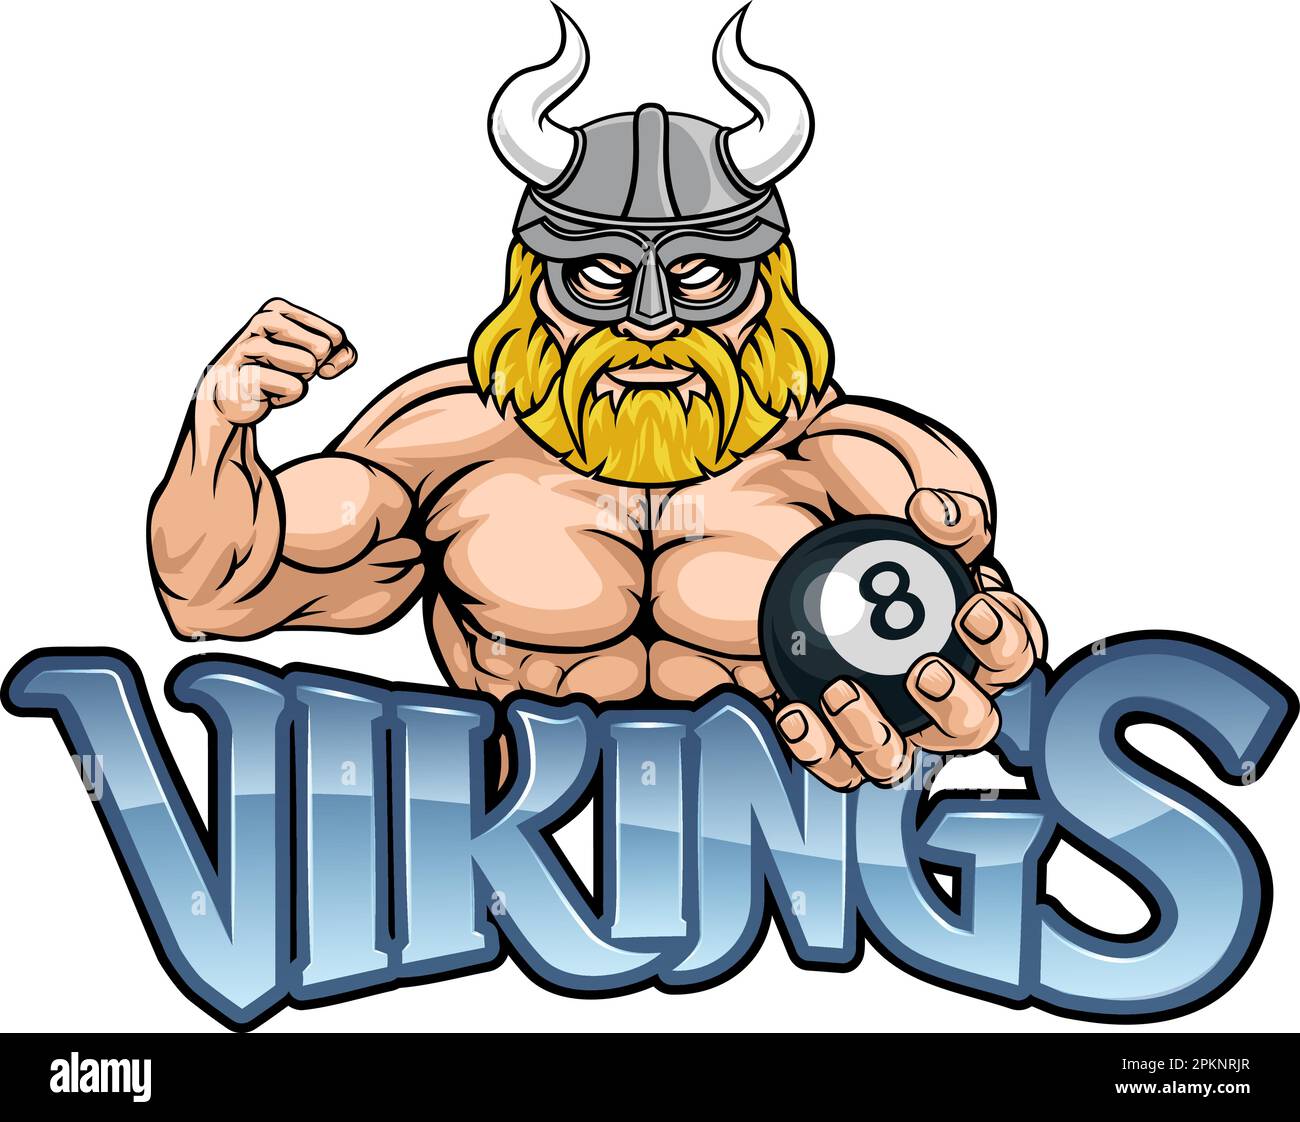 Viking Pool 8 Ball Billiards Mascot Cartoon Stock Vector